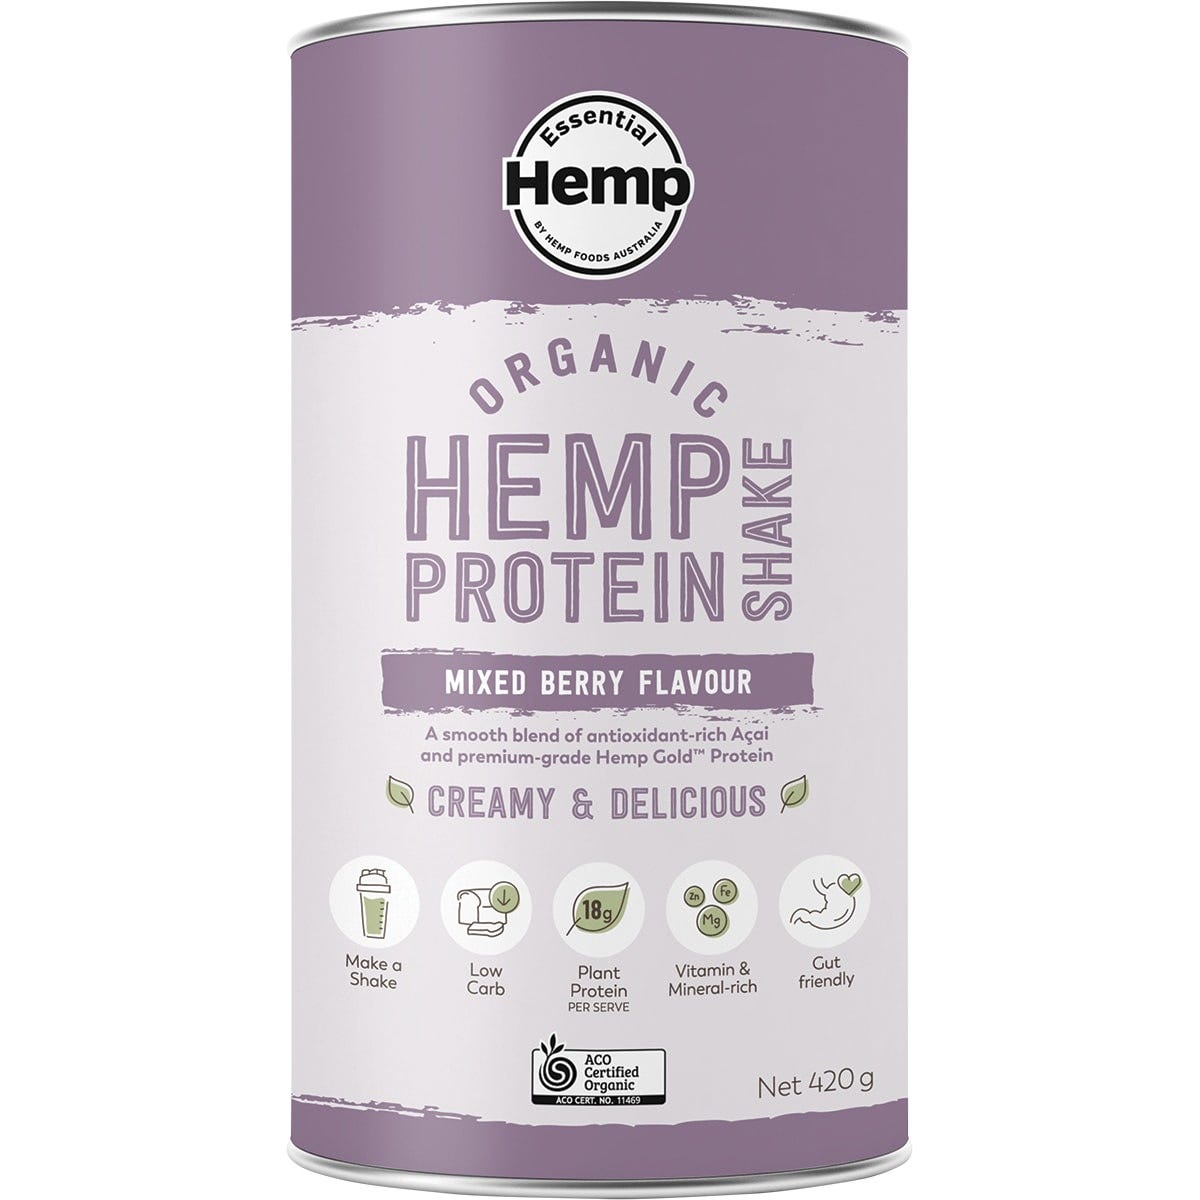 Hemp Foods Australia Organic Hemp Protein Mixed Berry & Acai 420g - Dr Earth - Hemp, Nutrition